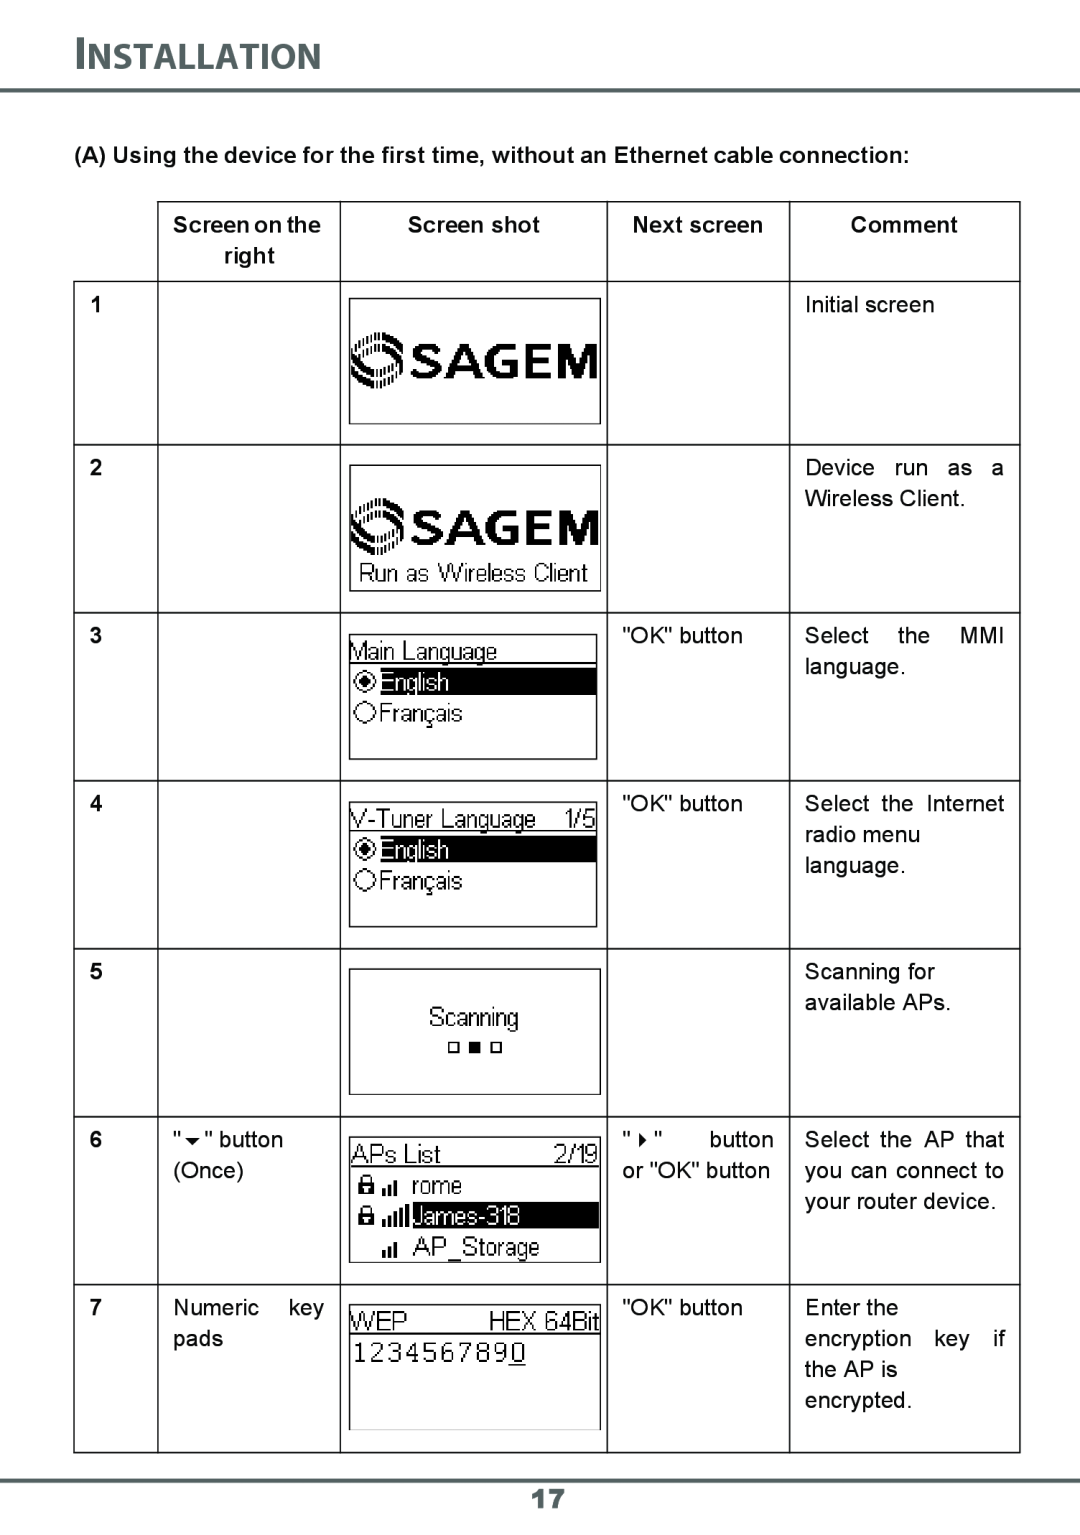 Sagem 700 manual Installation, Screen on the 